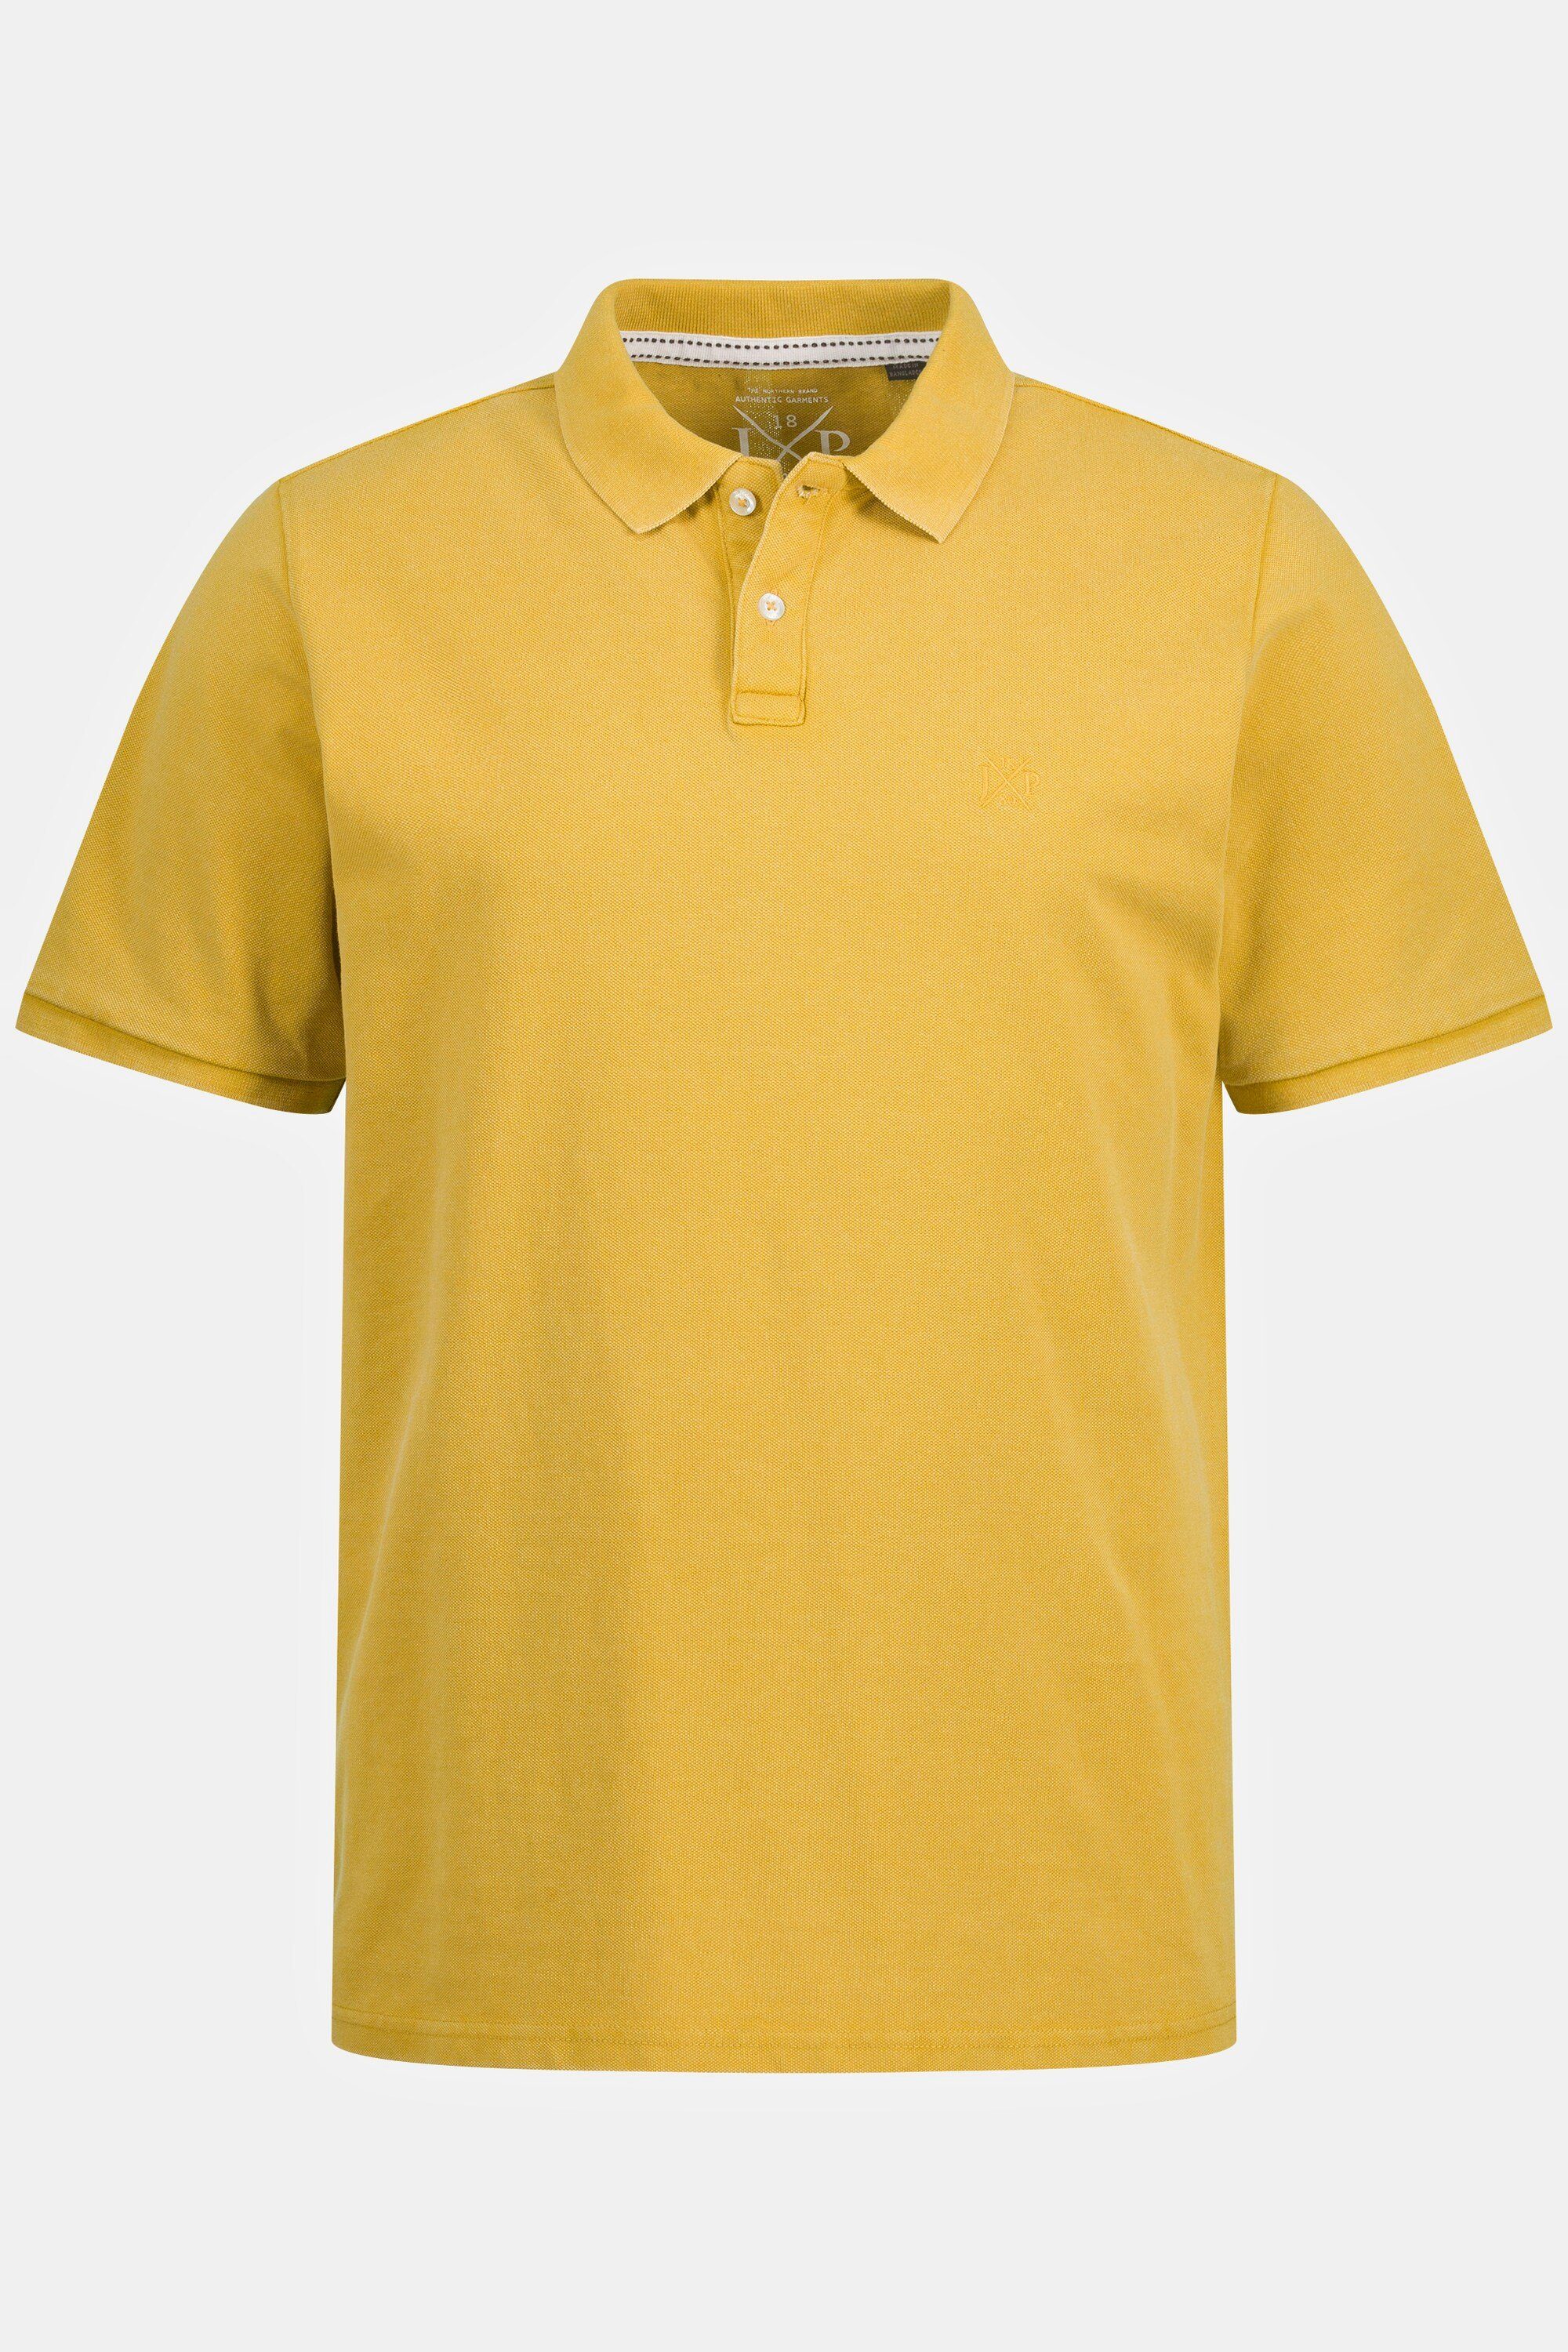 Poloshirt Waschung JP1880 Piqué Halbarm Poloshirt Vintage gelb